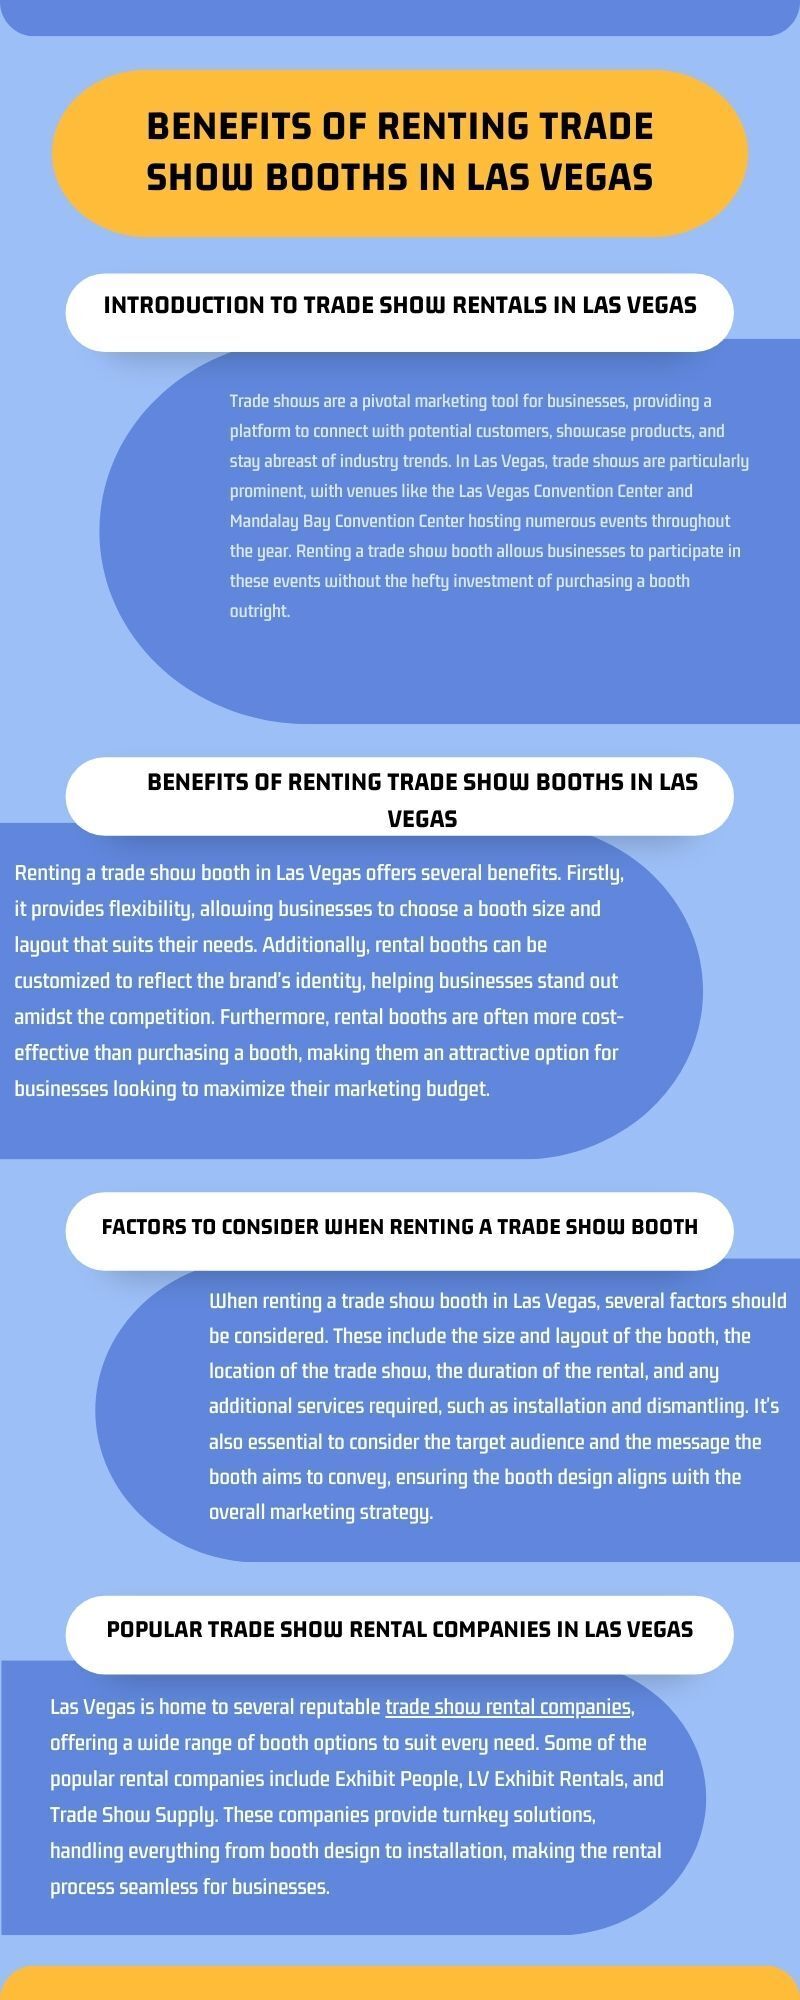 ImageVenue.com -             Benefits of Renting Trade Show Booths in Las Vegas.jpg